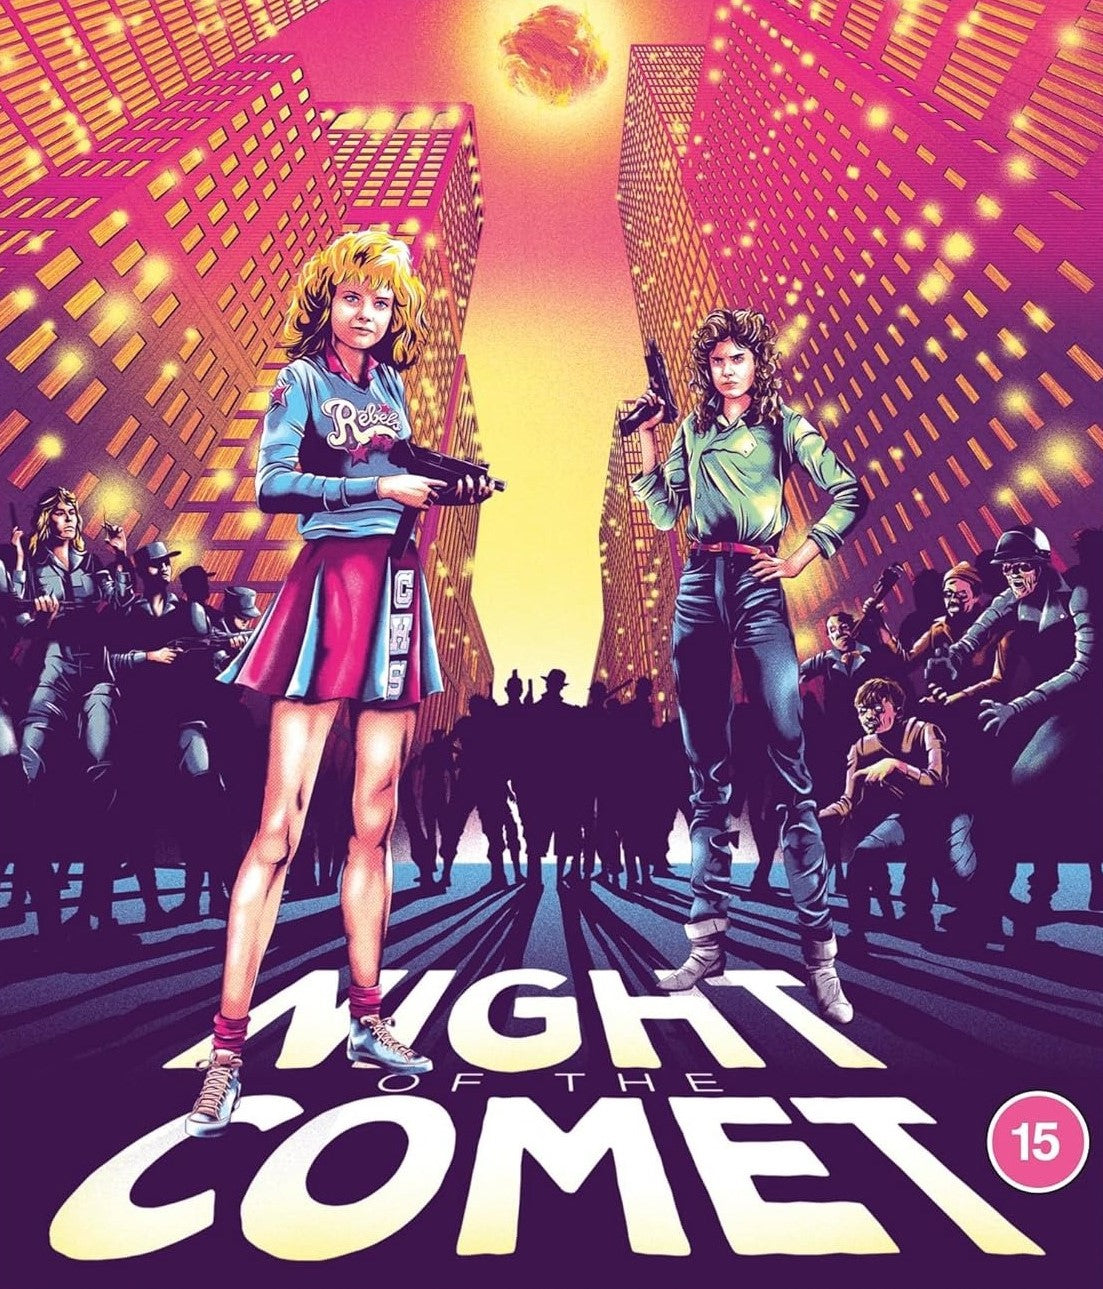 NIGHT OF THE COMET (REGION B IMPORT) BLU-RAY